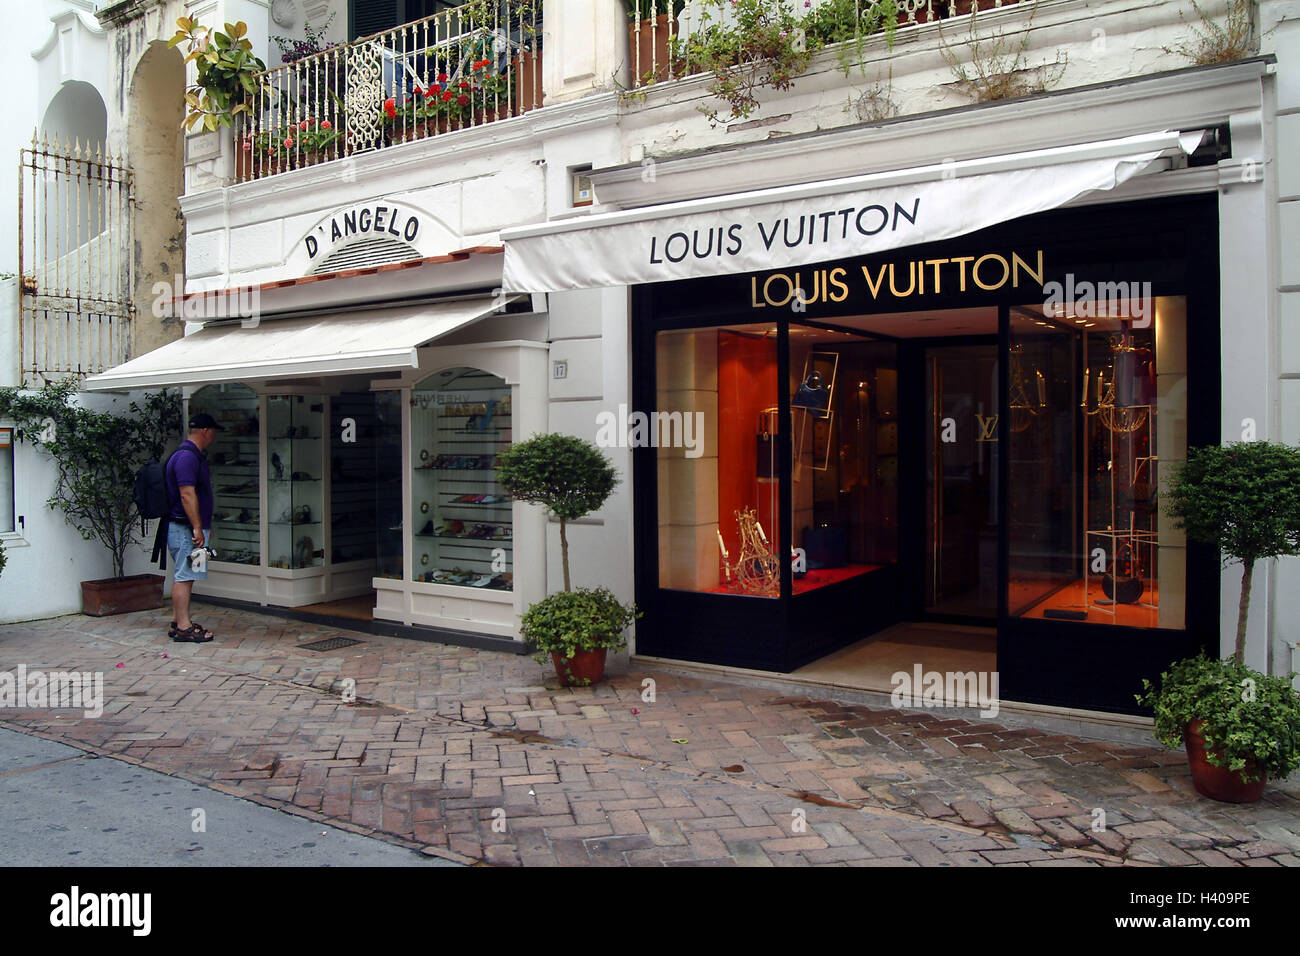 Louis Vuitton Capri Women store, Italy